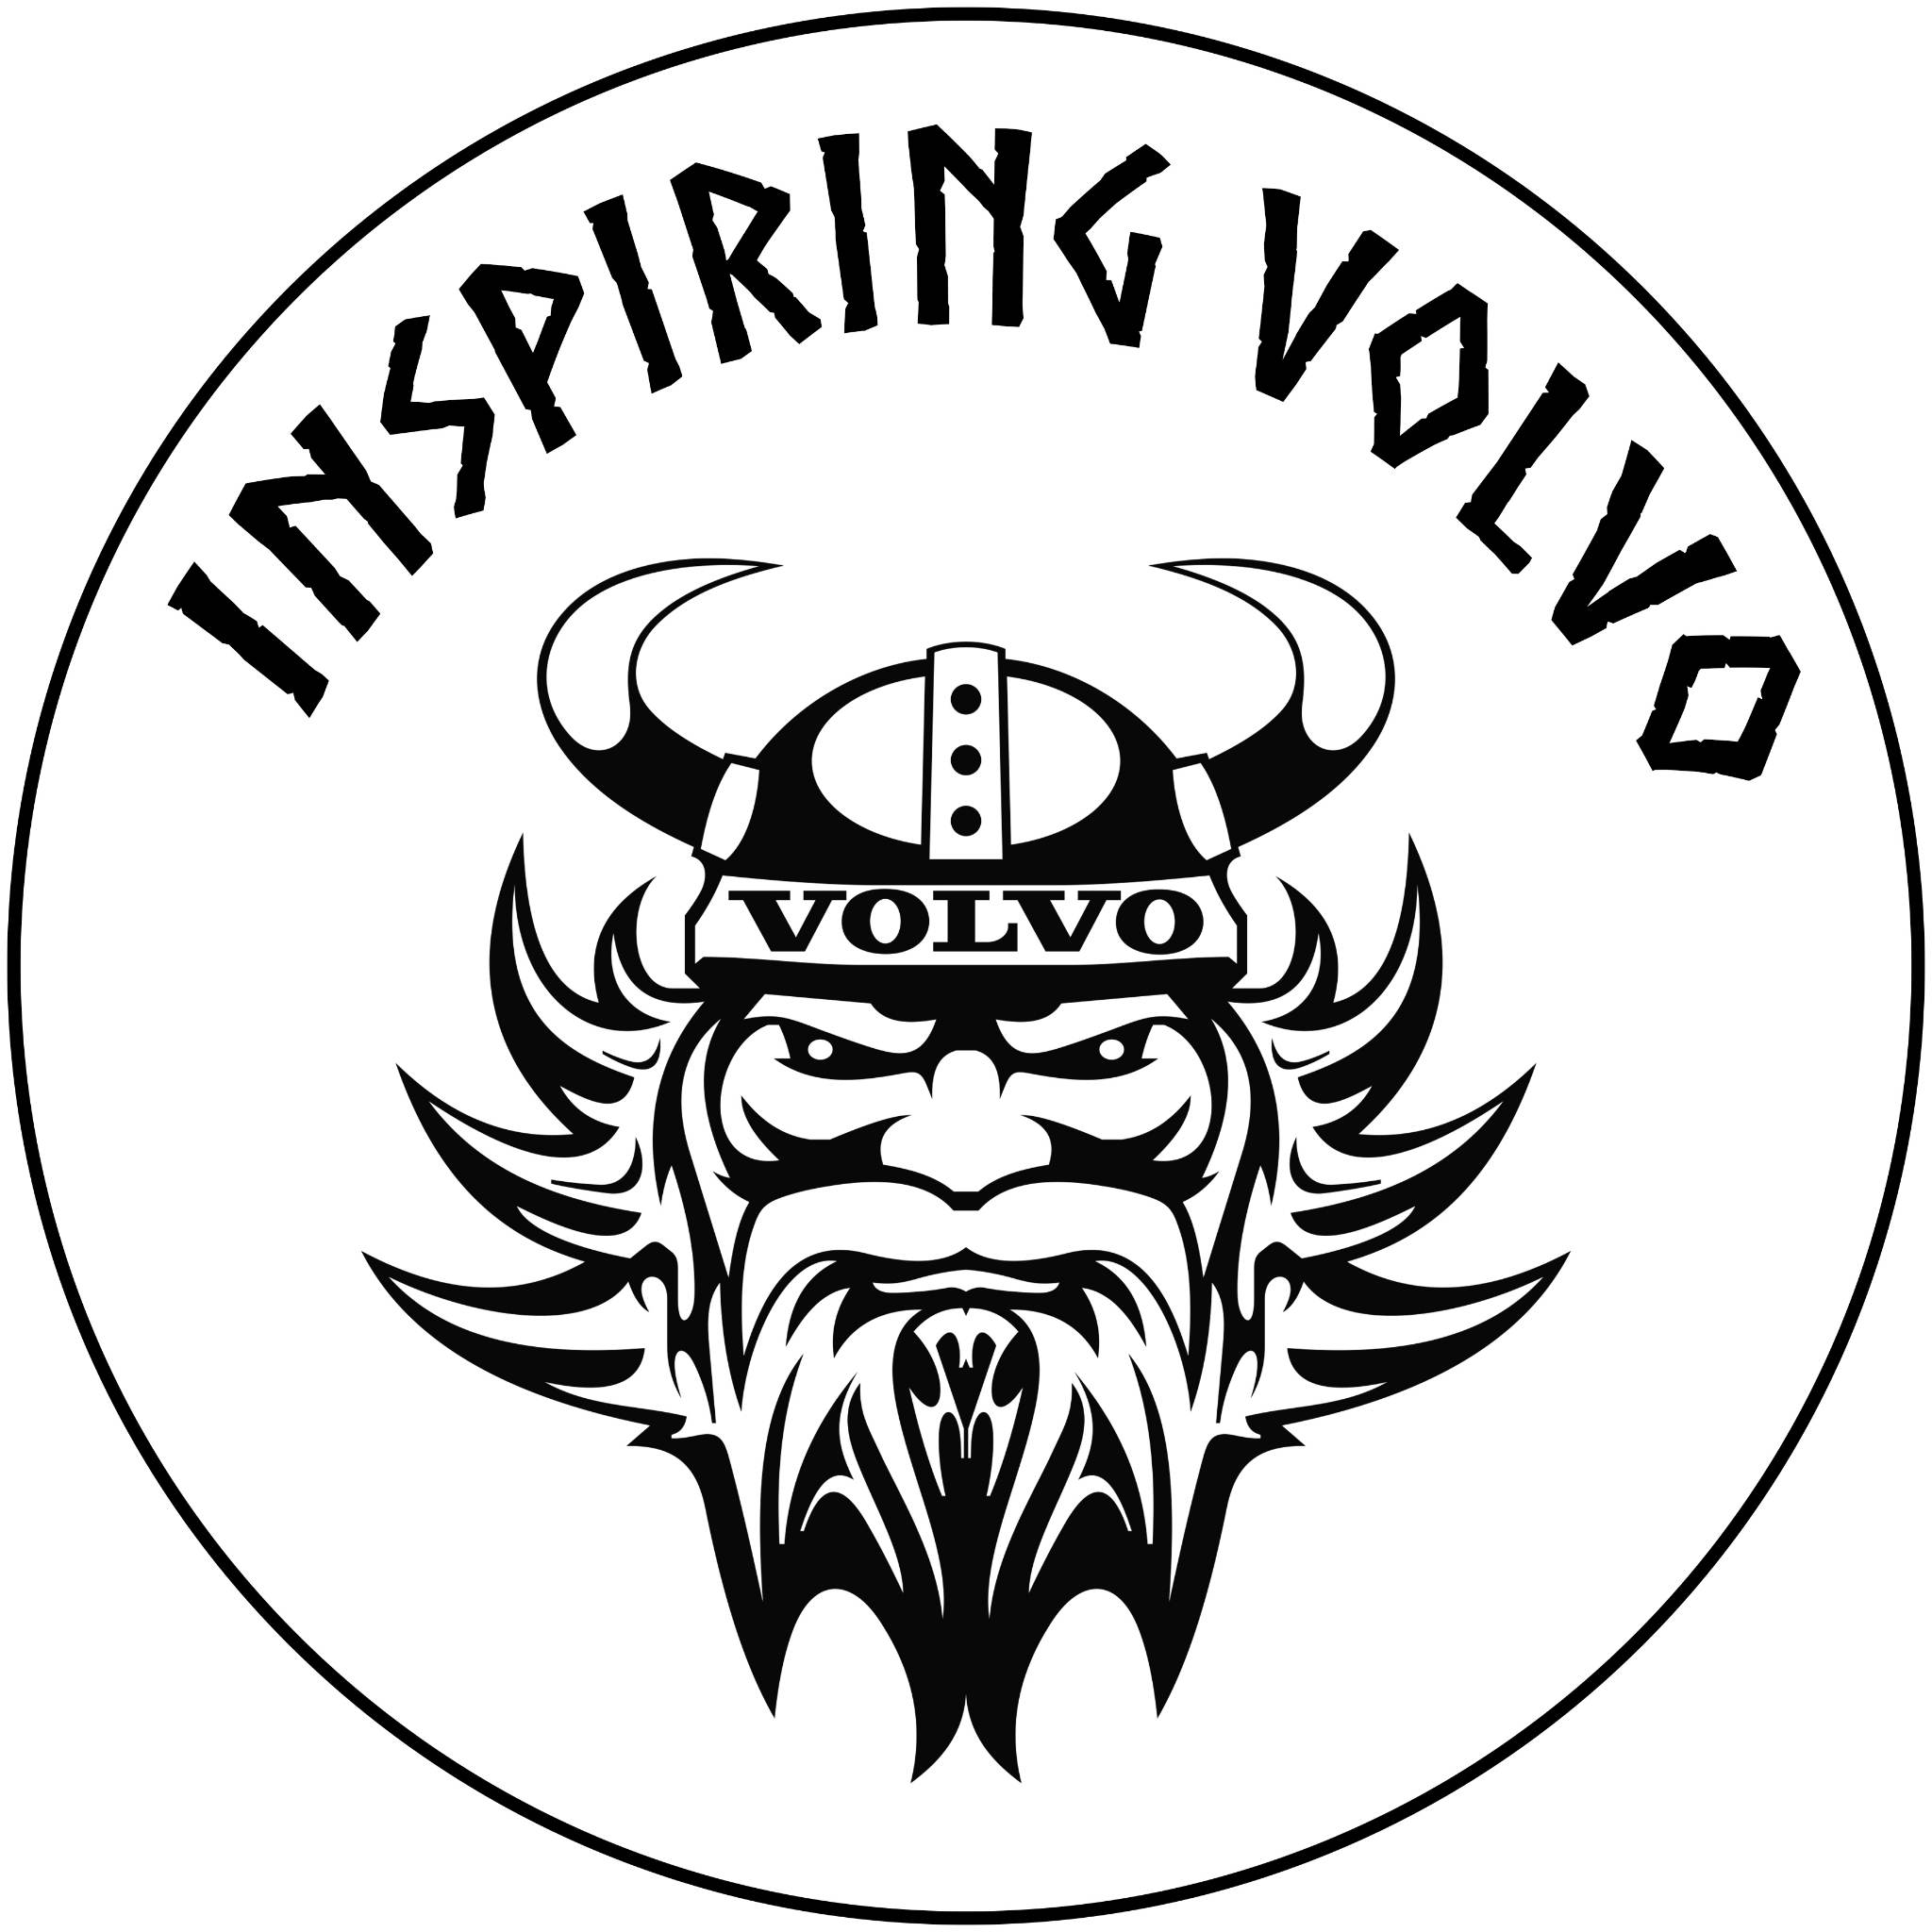 Inspiring Volvo logo for Viking Invasion Day